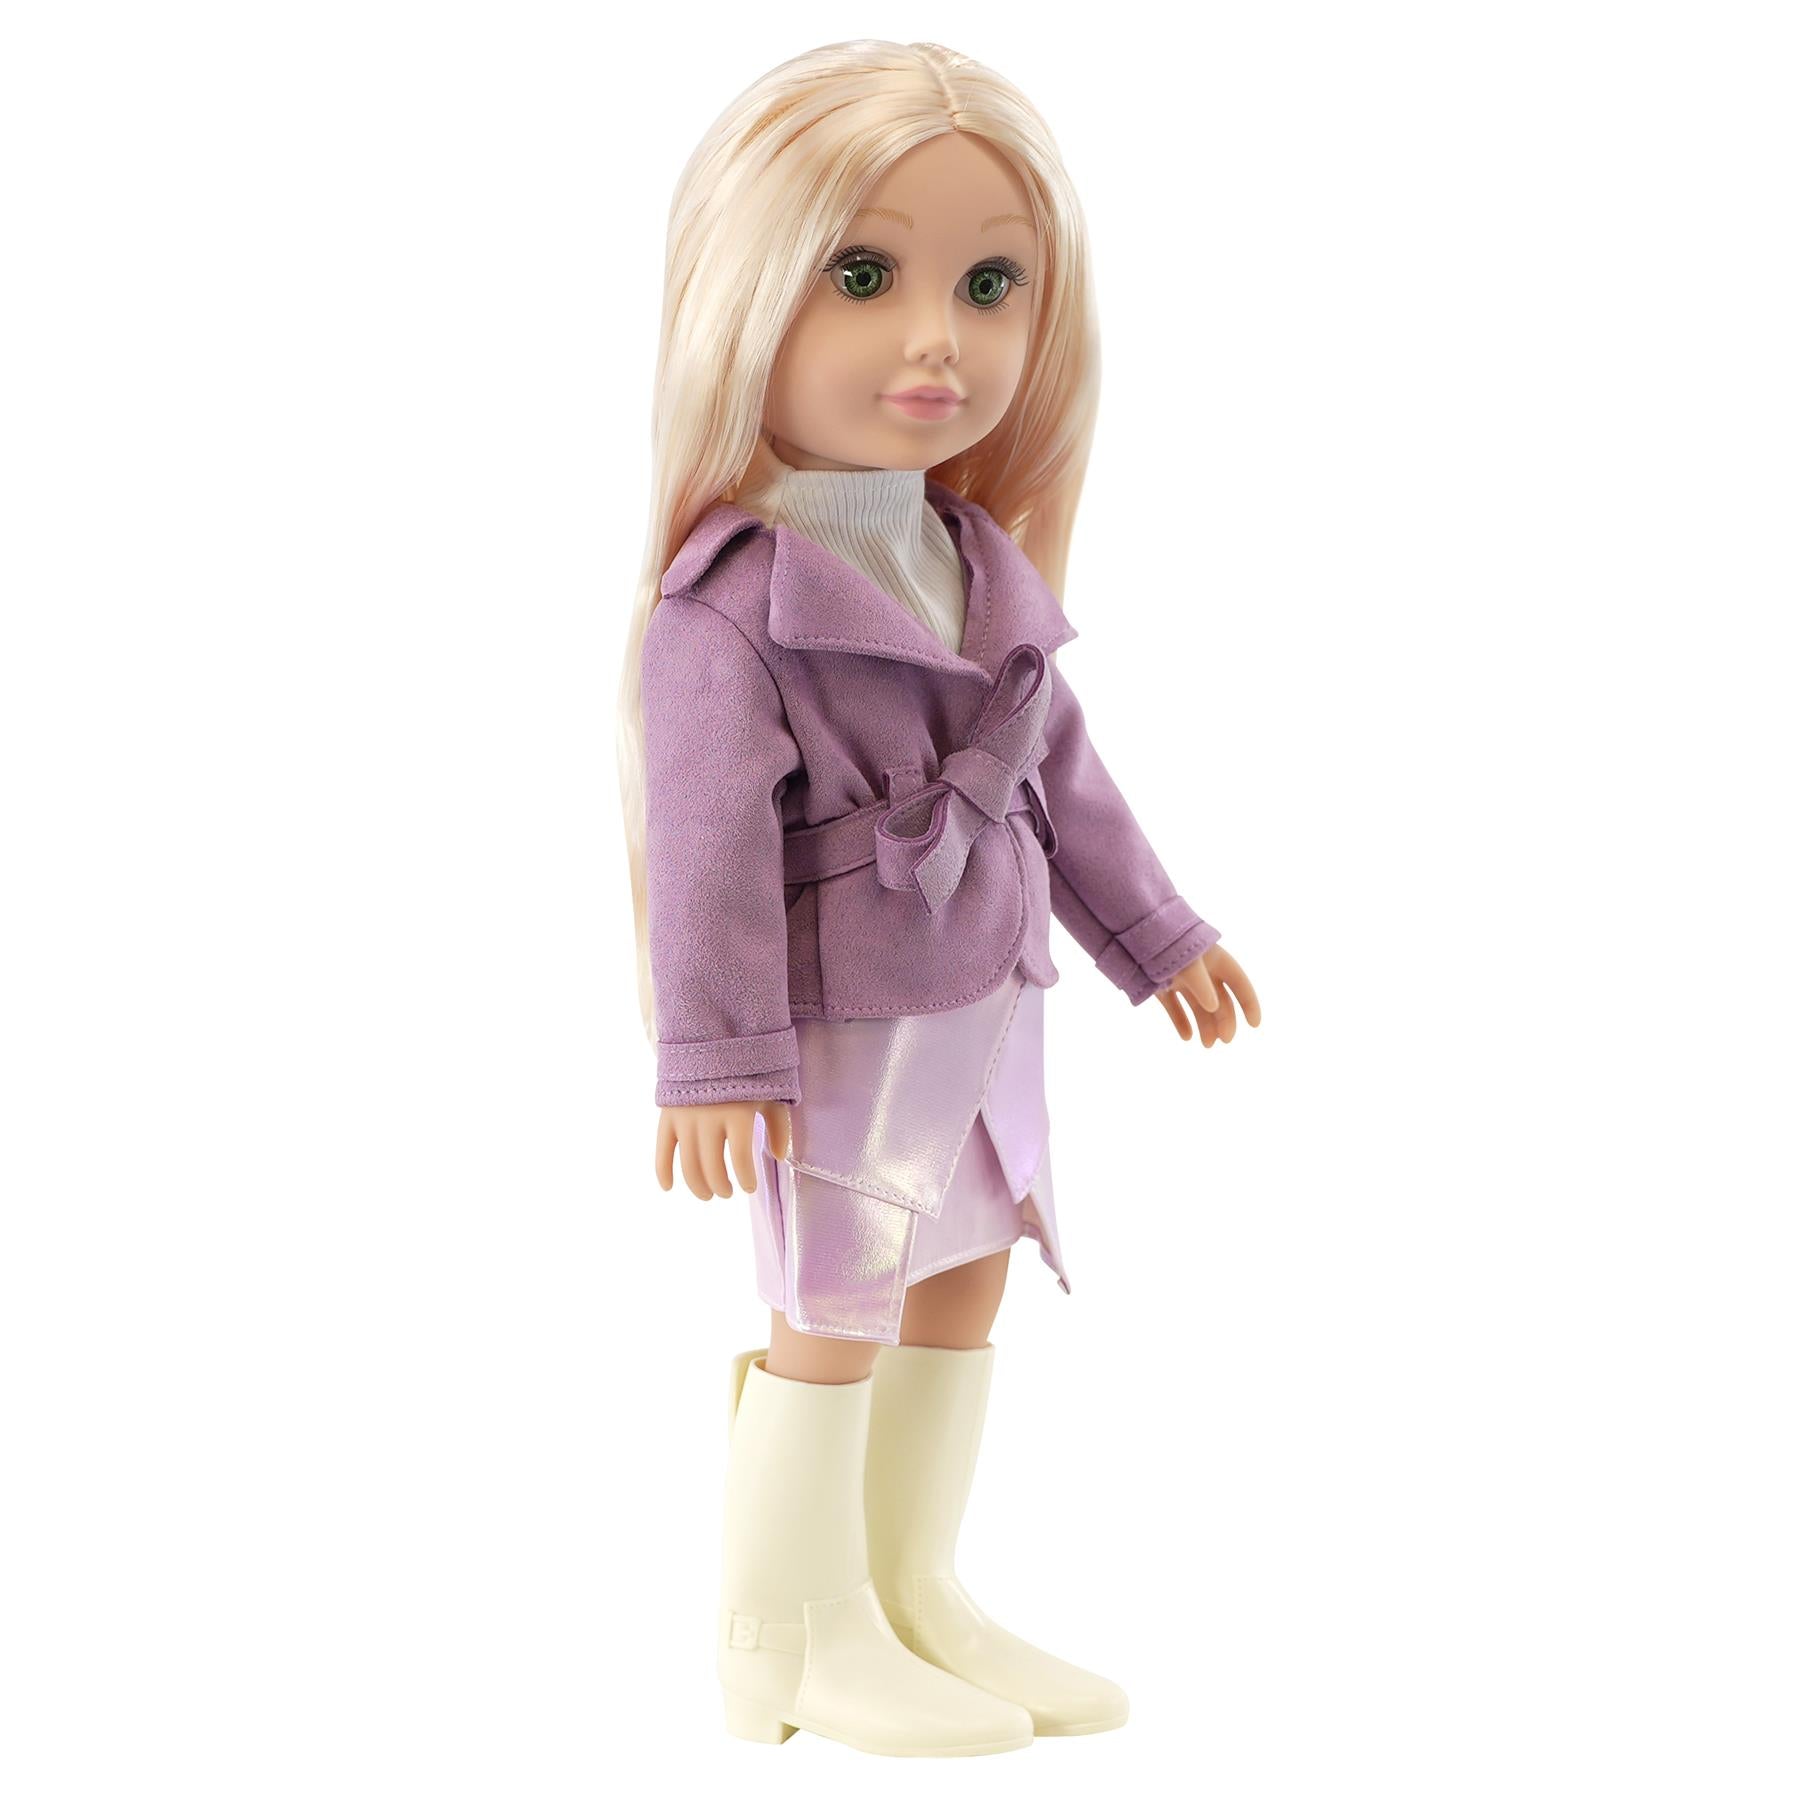 Bibi Doll 18 Fashion Baby Doll Ashley Stylish Movable Toy Long Blonde Hair Gift